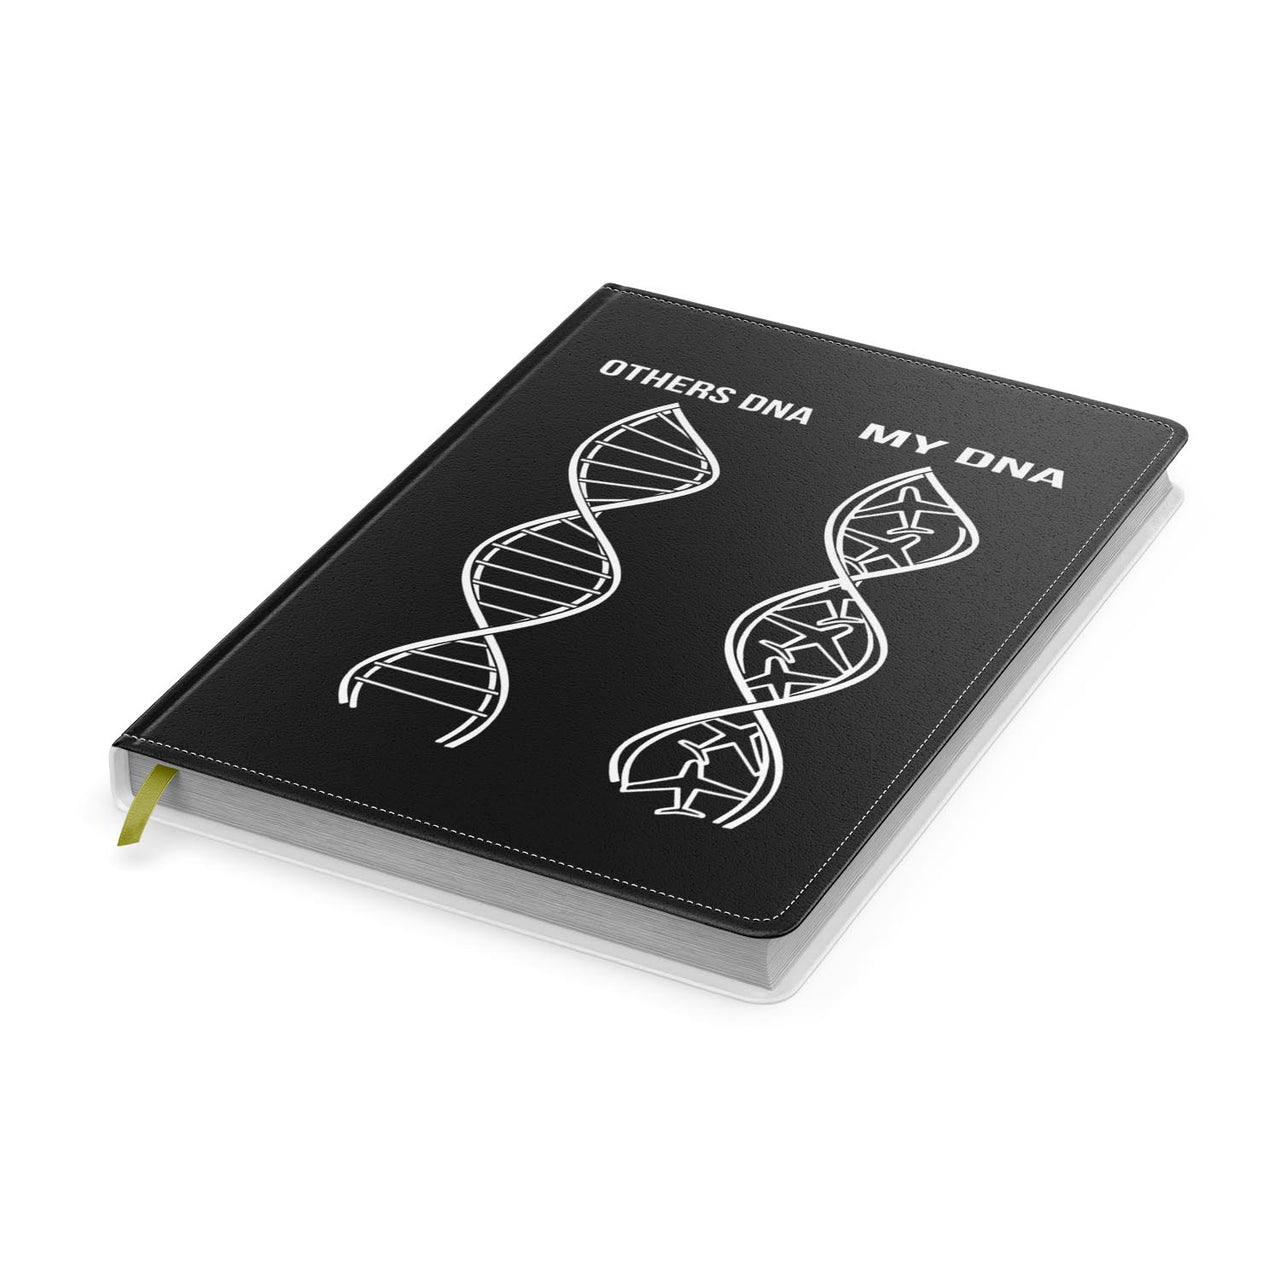 Aviation DNA Designed Notebooks